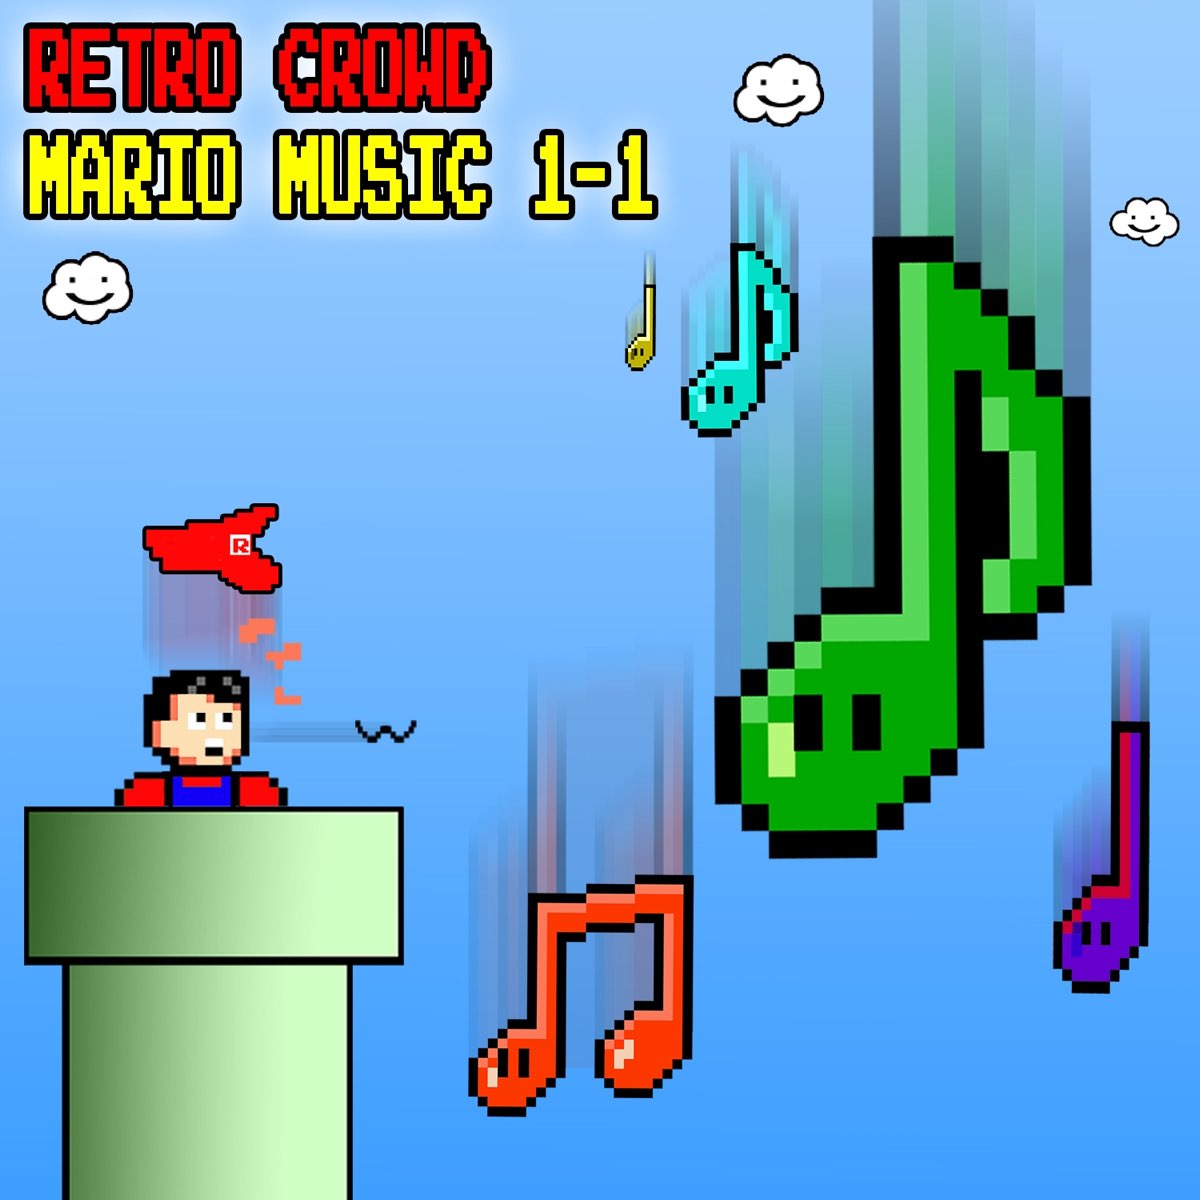 Super mario песня. Музыка Mario. Музыка из игры Марио. Марио обложка. Марио игра музыка.